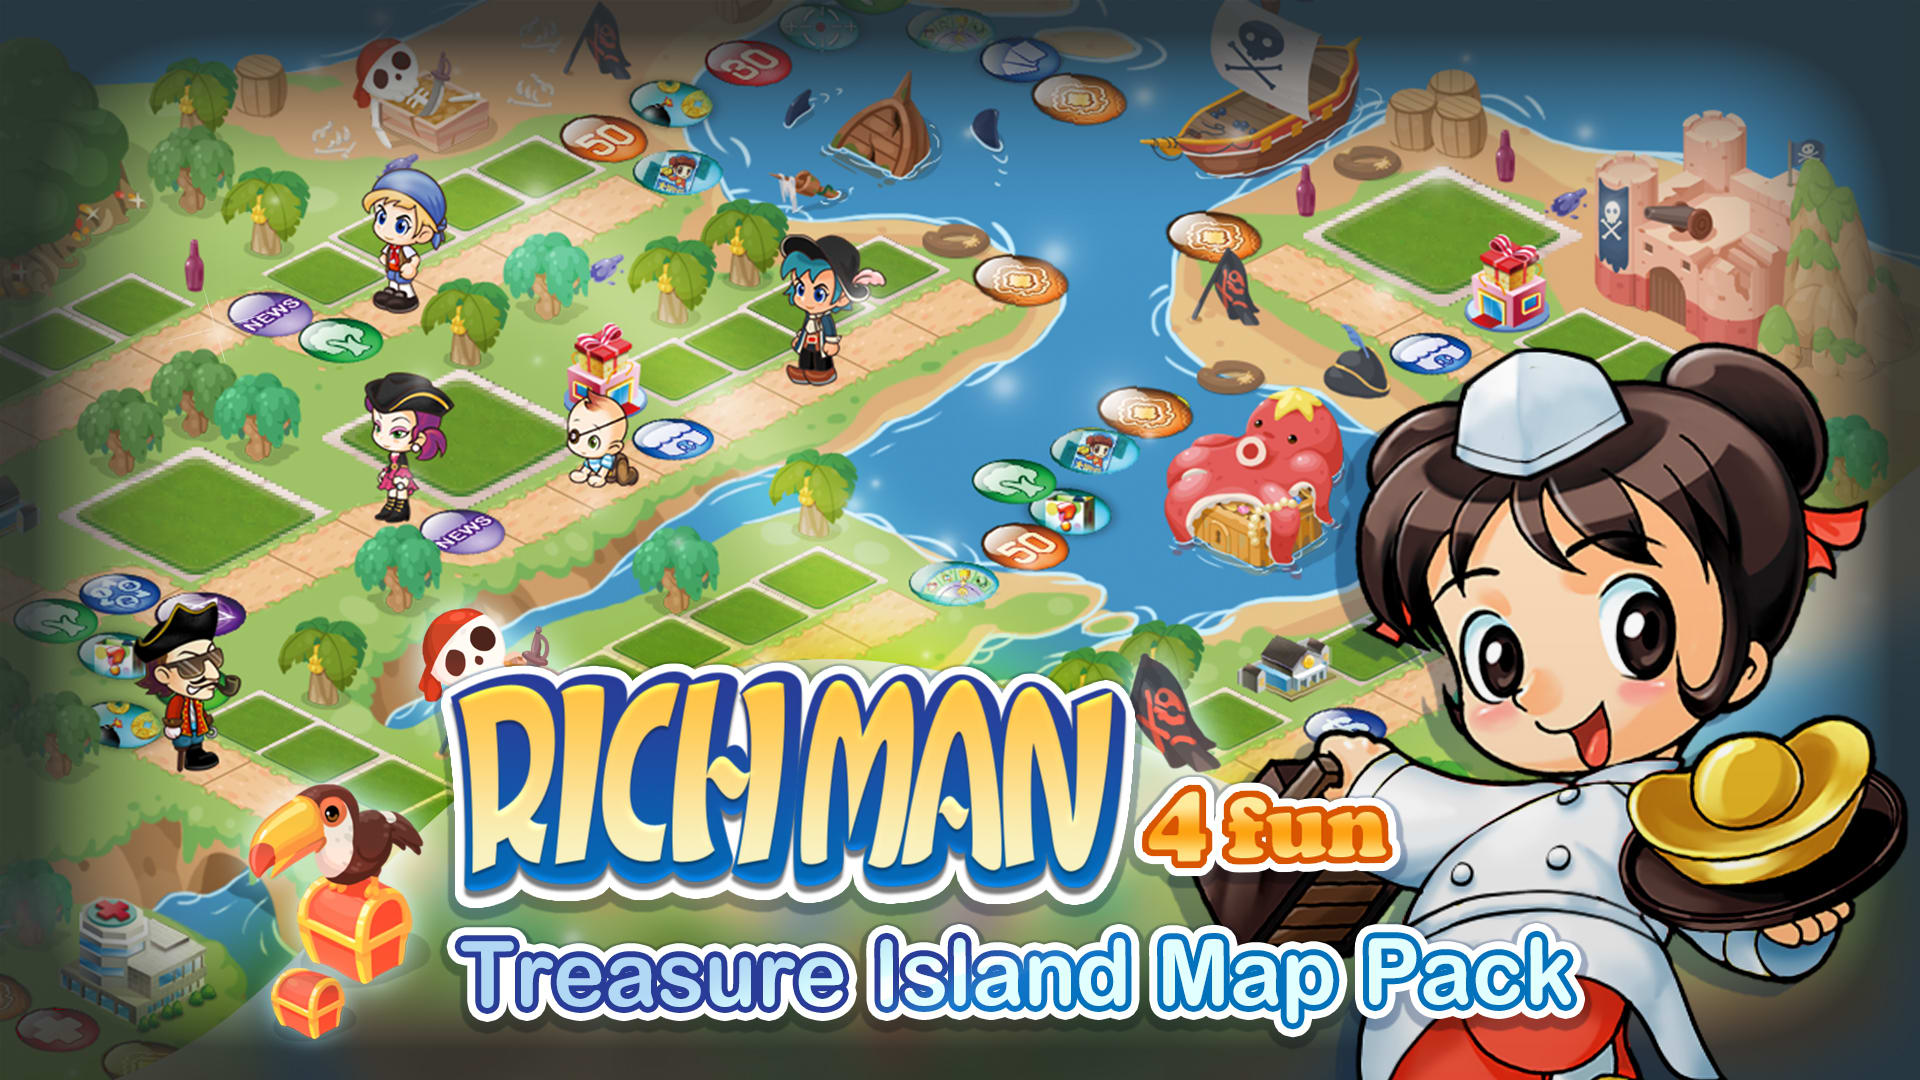 Treasure Island Map Pack